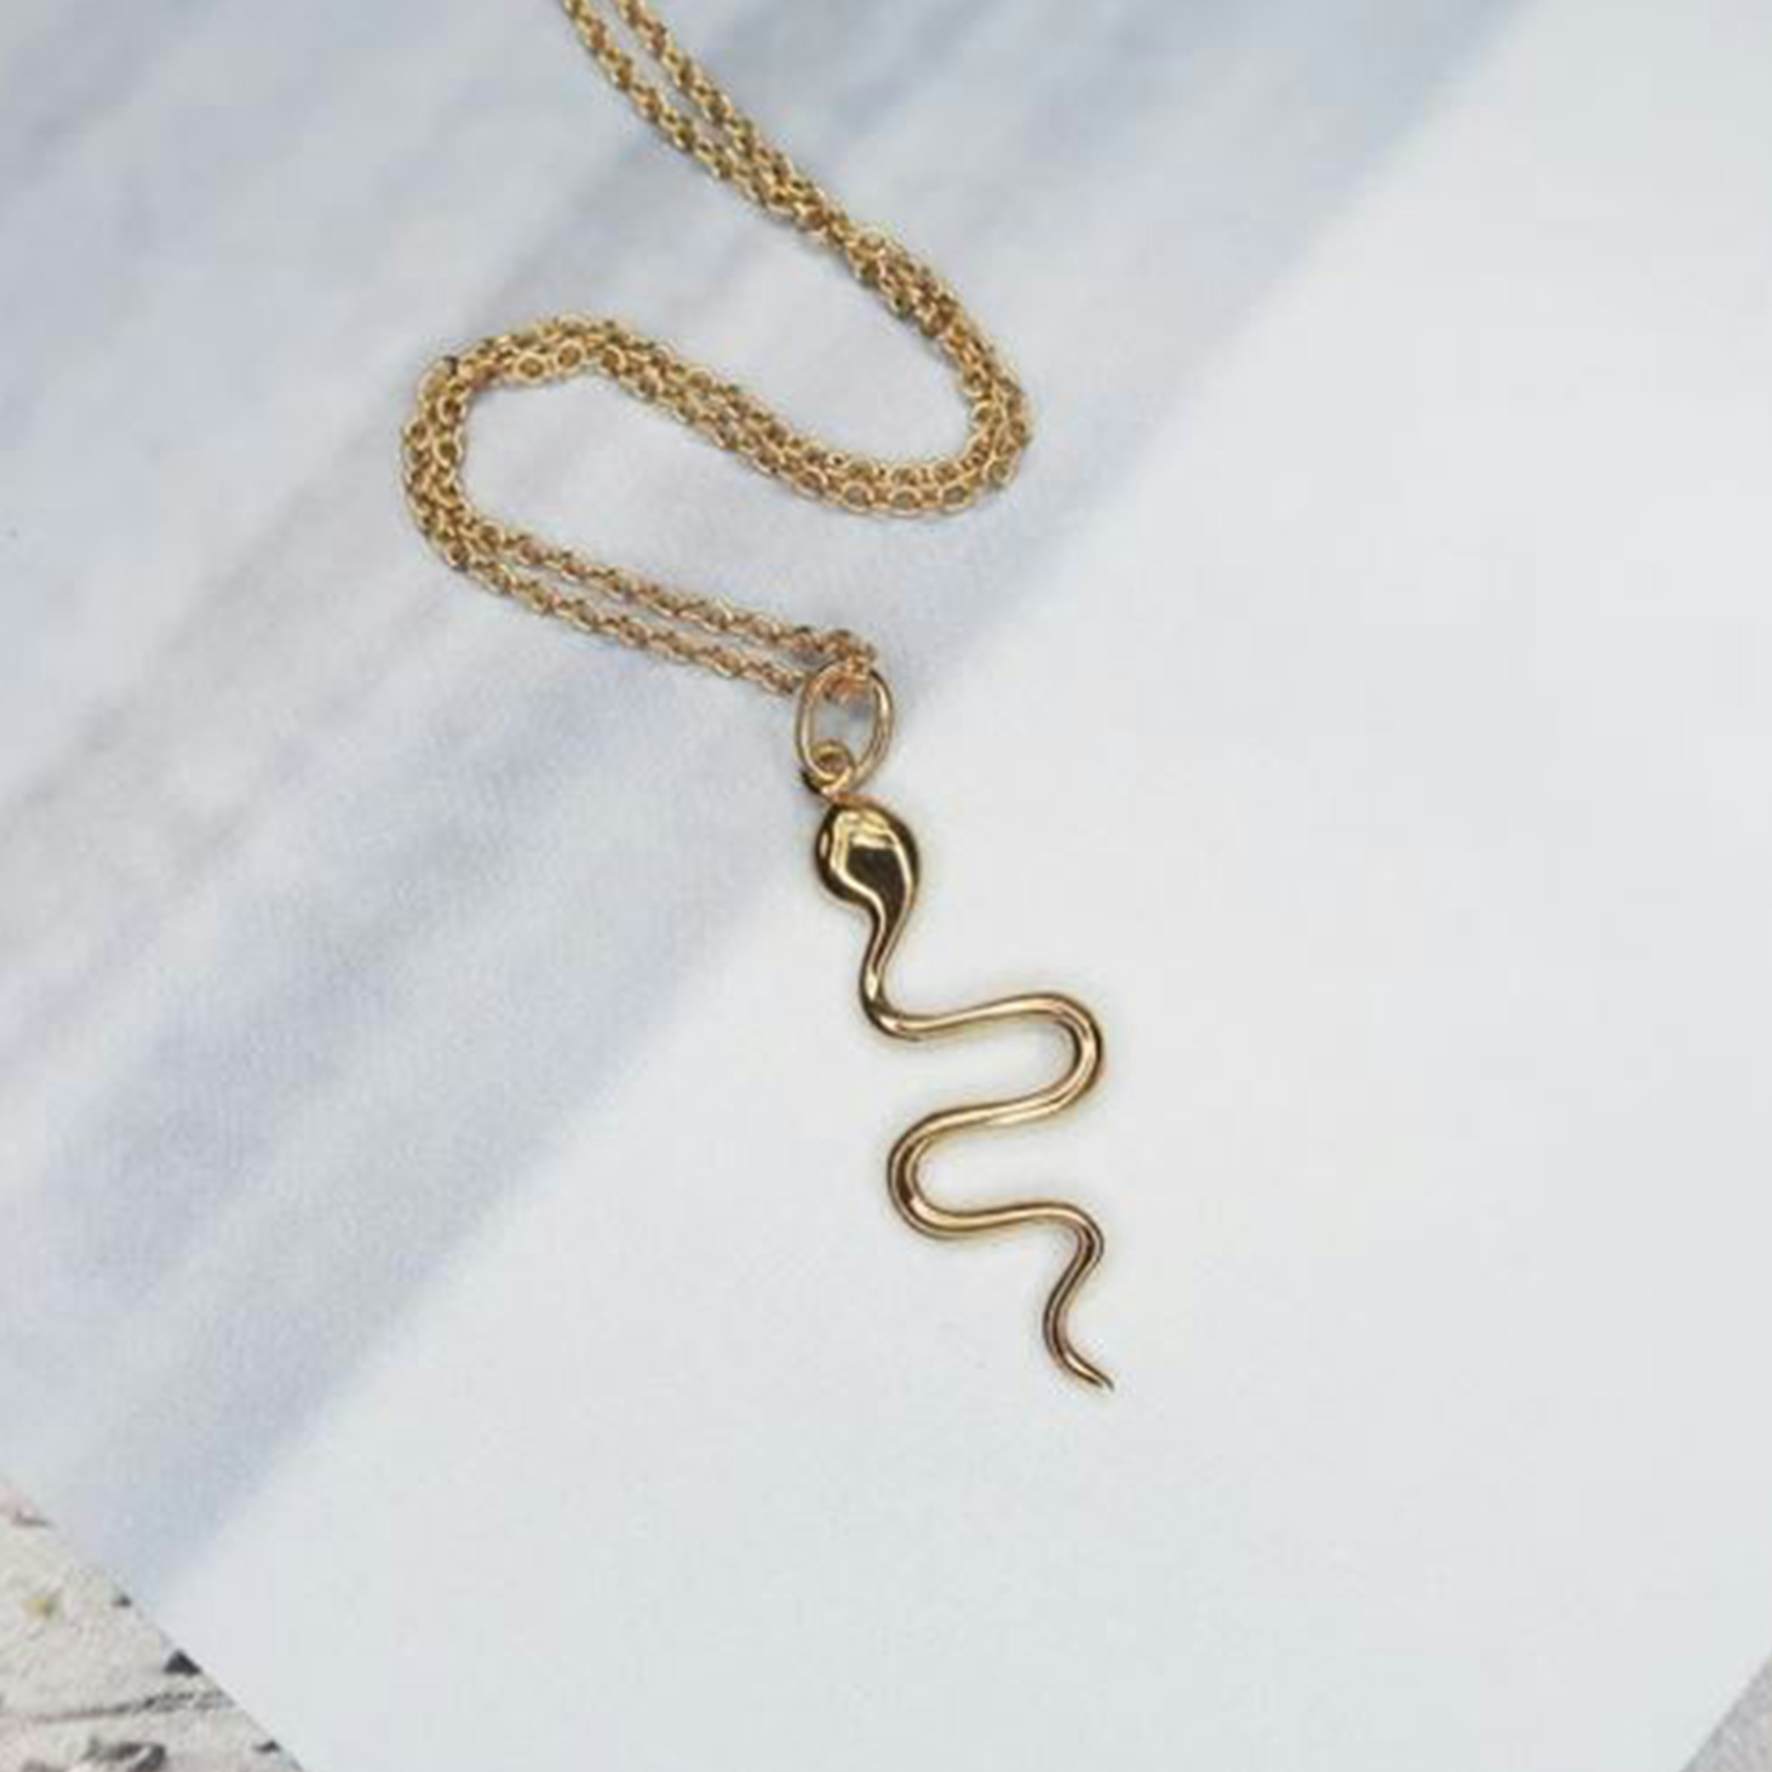 Young One Snake Necklace von Sistie in Vergoldet-Silber Sterling 925